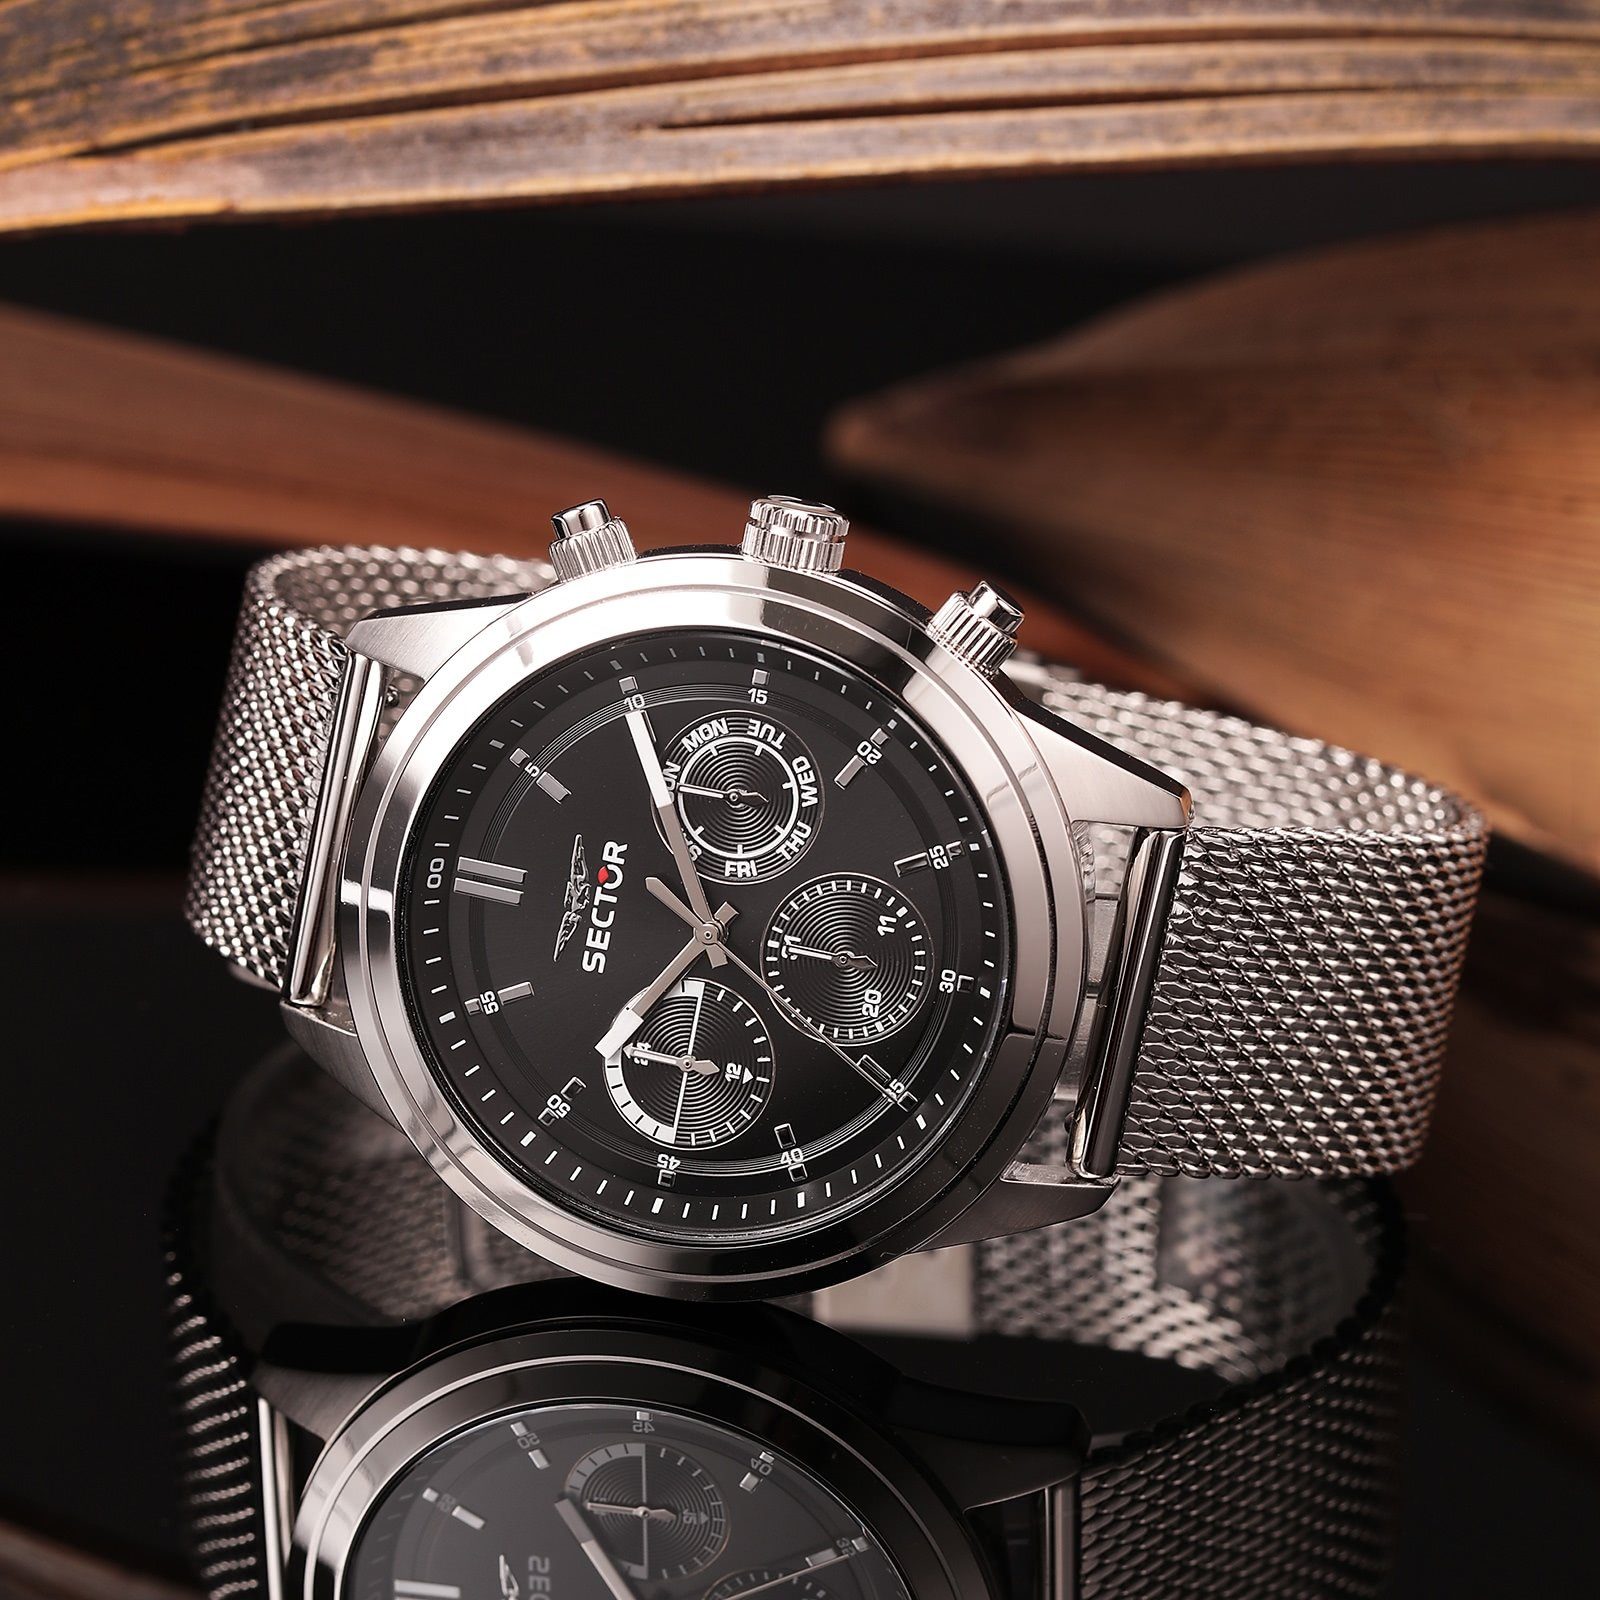 groß Armbanduhr Armbanduhr Multifunktionsuhr Fashion Herren Multifunkt, Sector rund, silber, (43mm), Sector Herren Edelstahlarmband